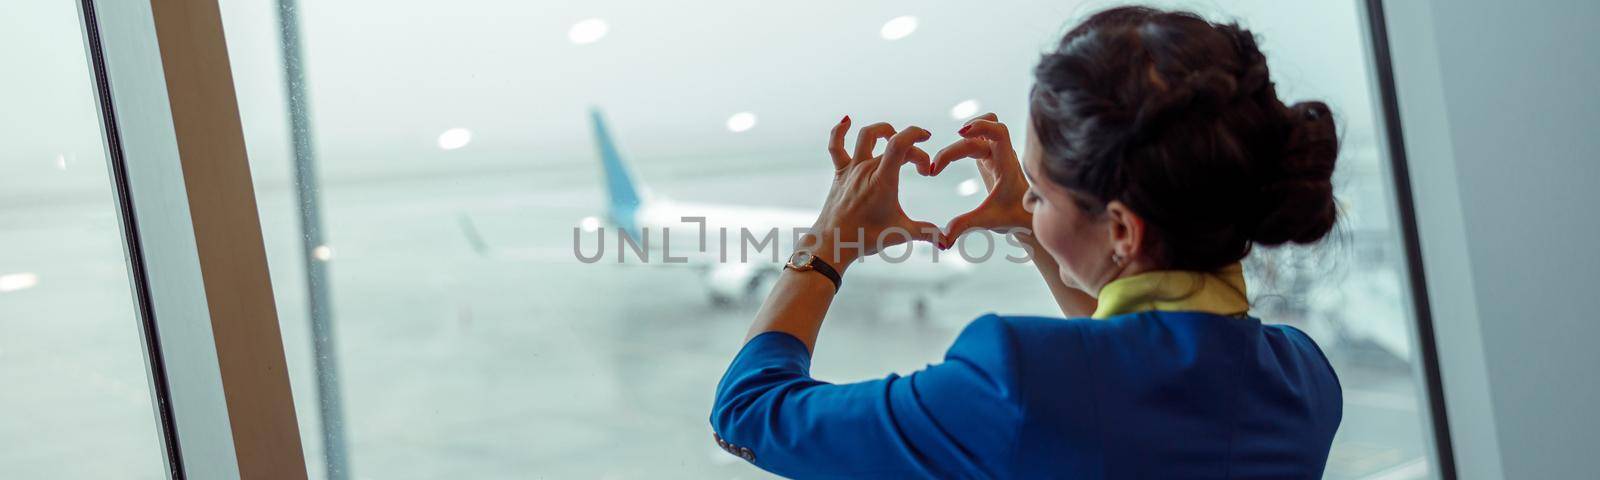 Woman stewardess doing heart symbol in airport terminal by Yaroslav_astakhov